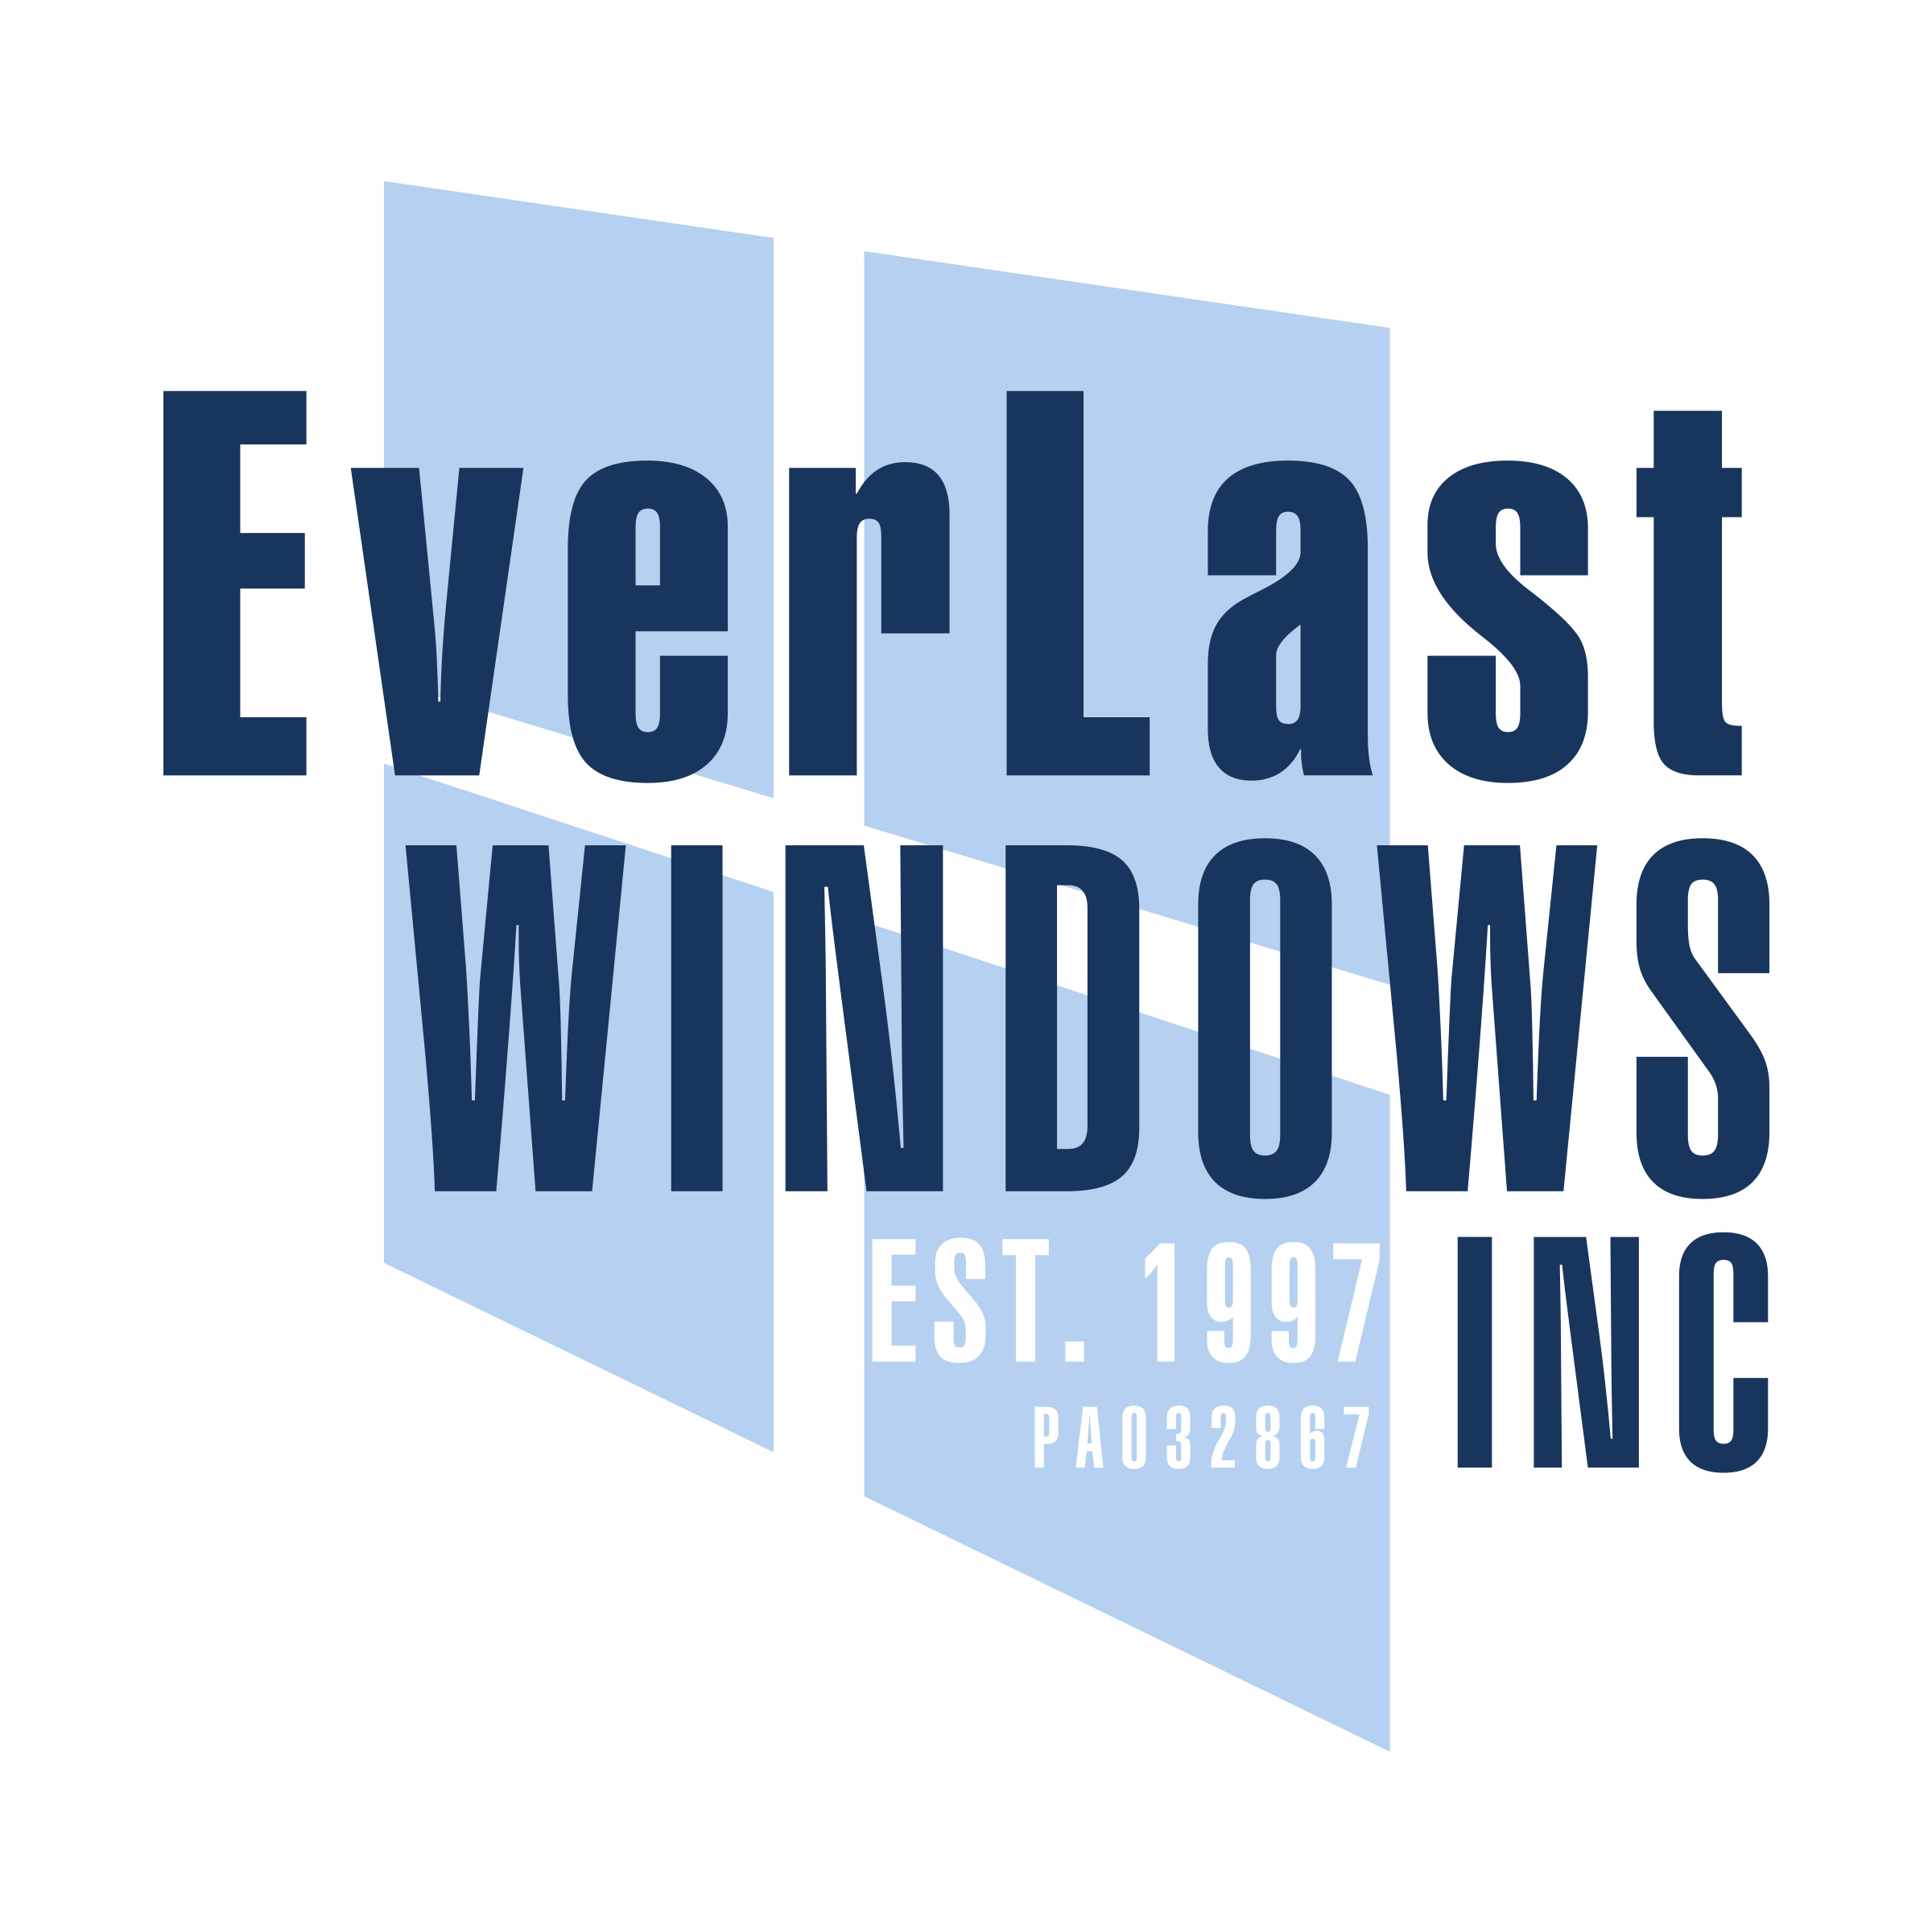 Everlast Windows Comp 2